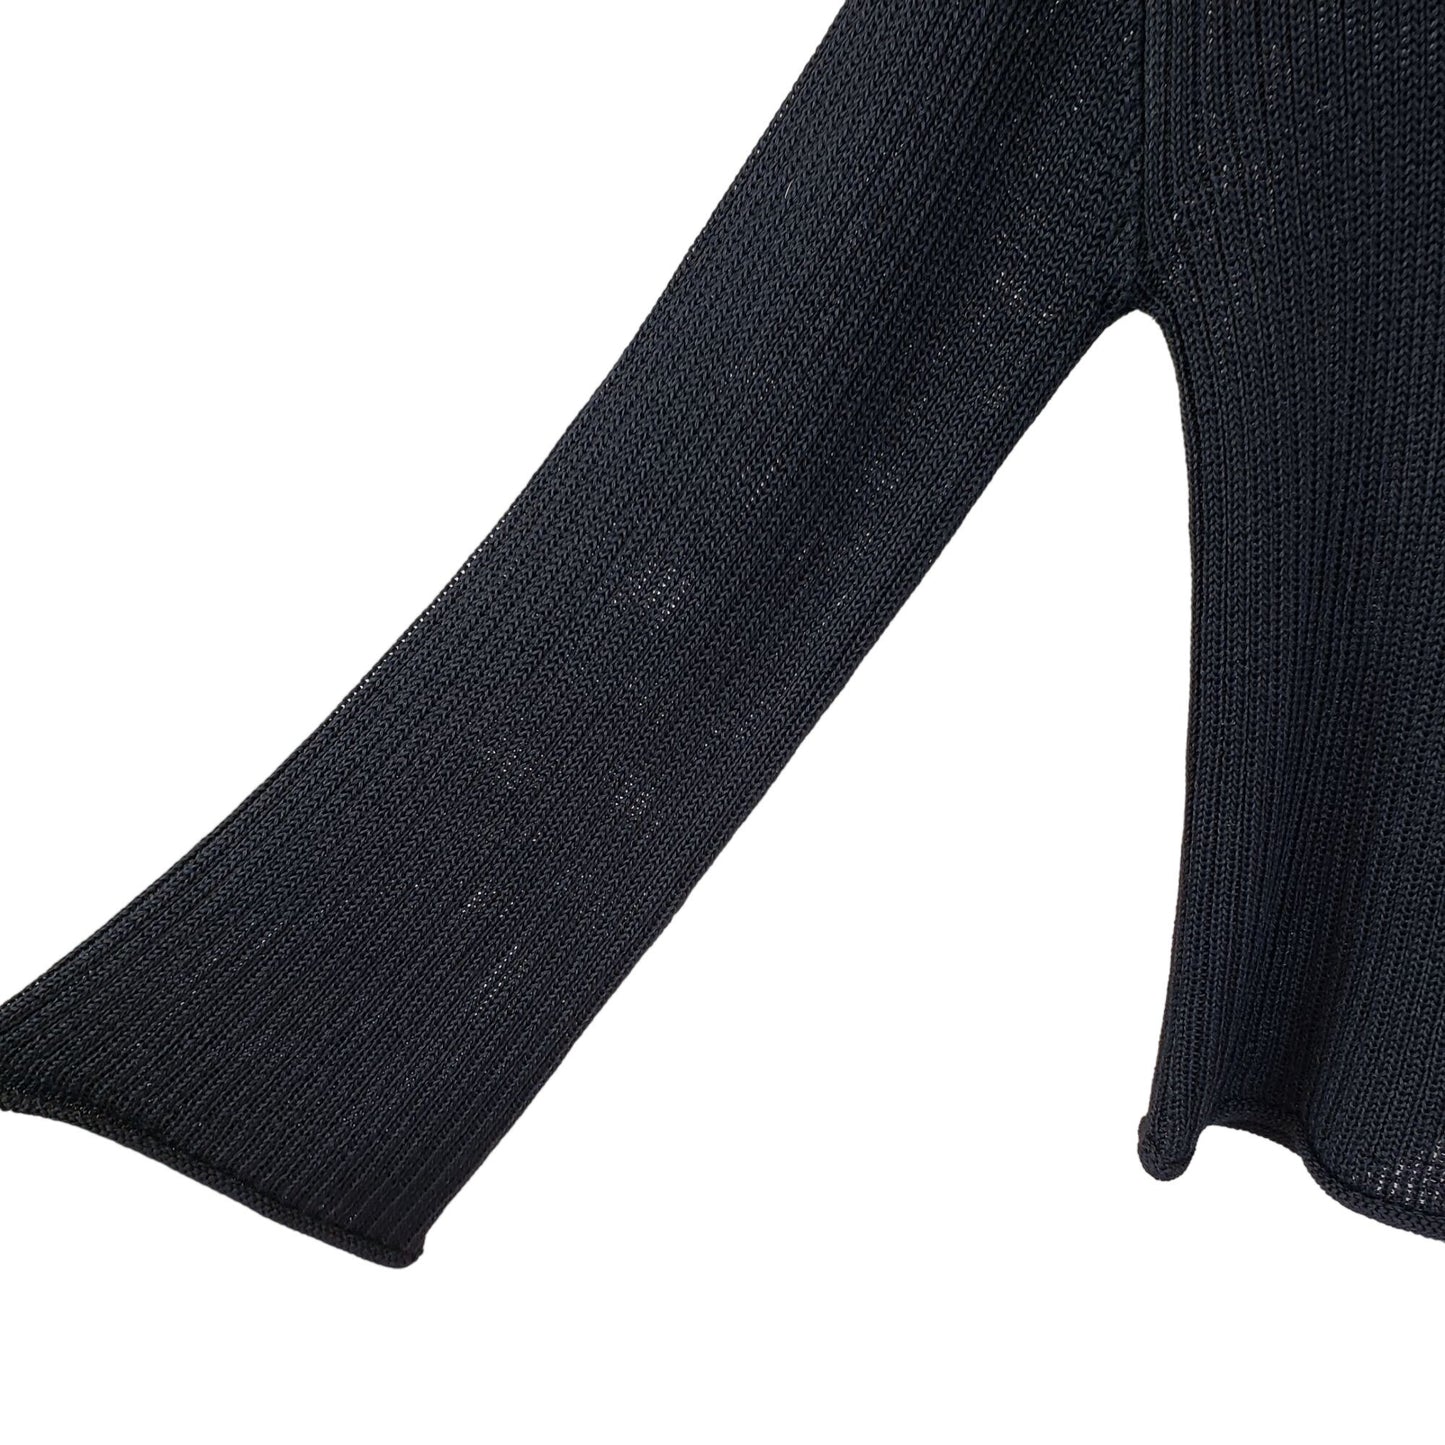 Elizabeth & James Knit Crewneck Bell Sleeve Sweater Size Small